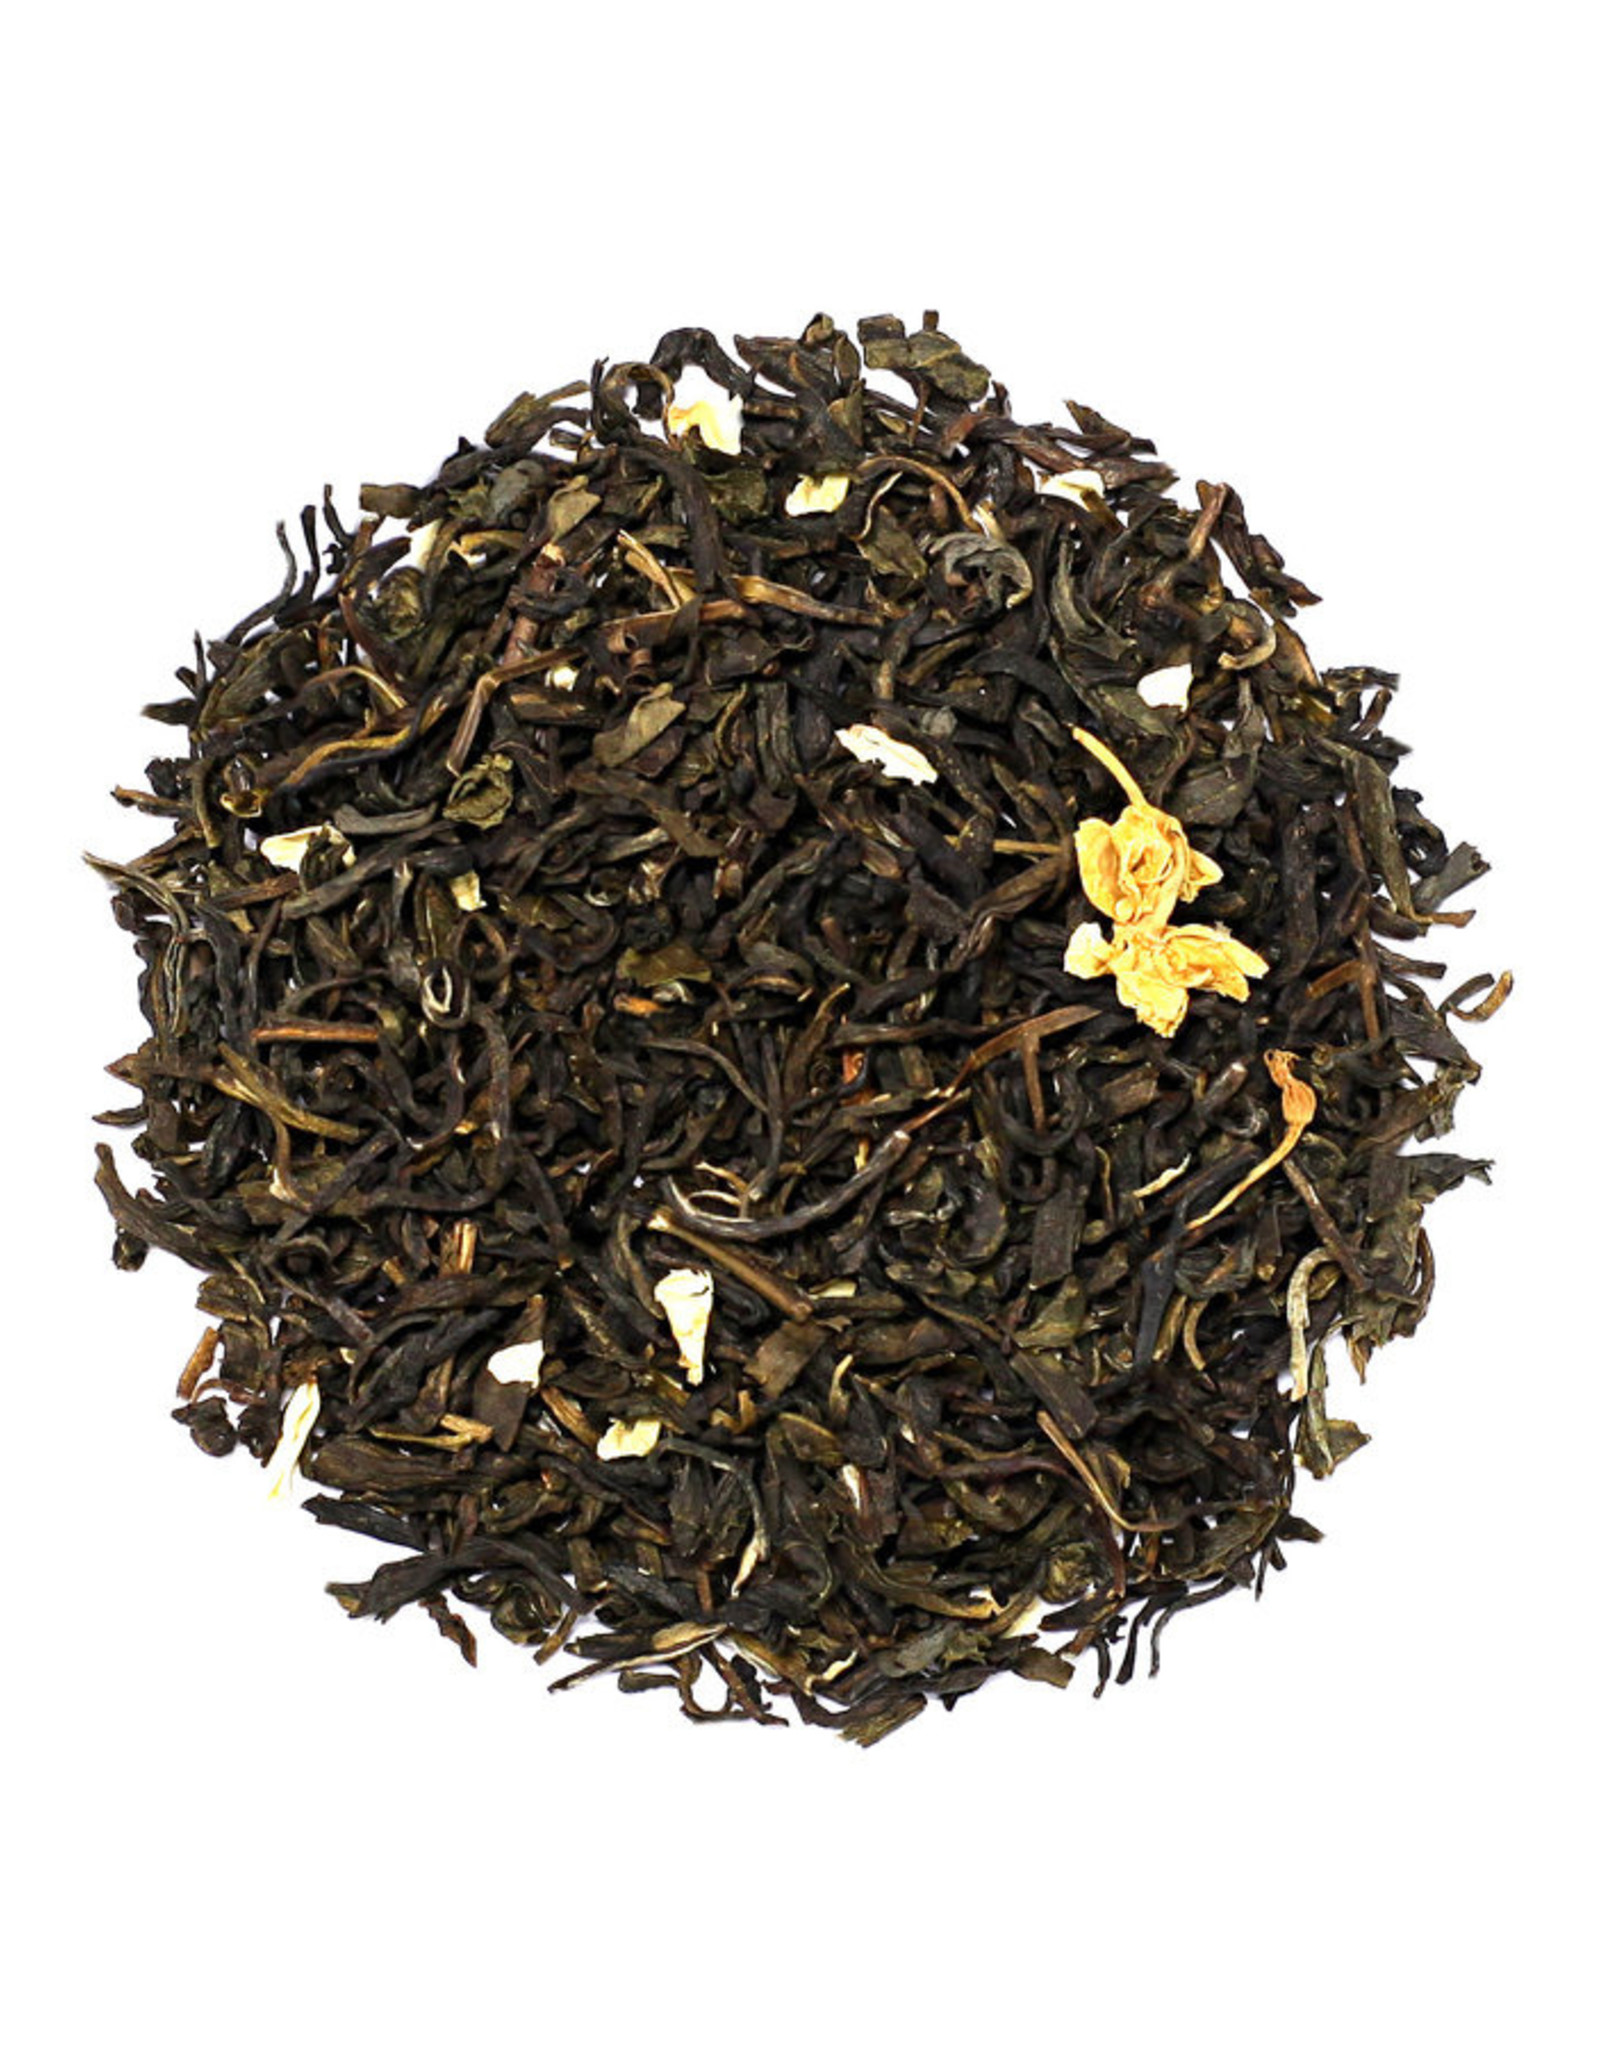 Or Tea? Organic Dragon Jasmine Green Tin canister